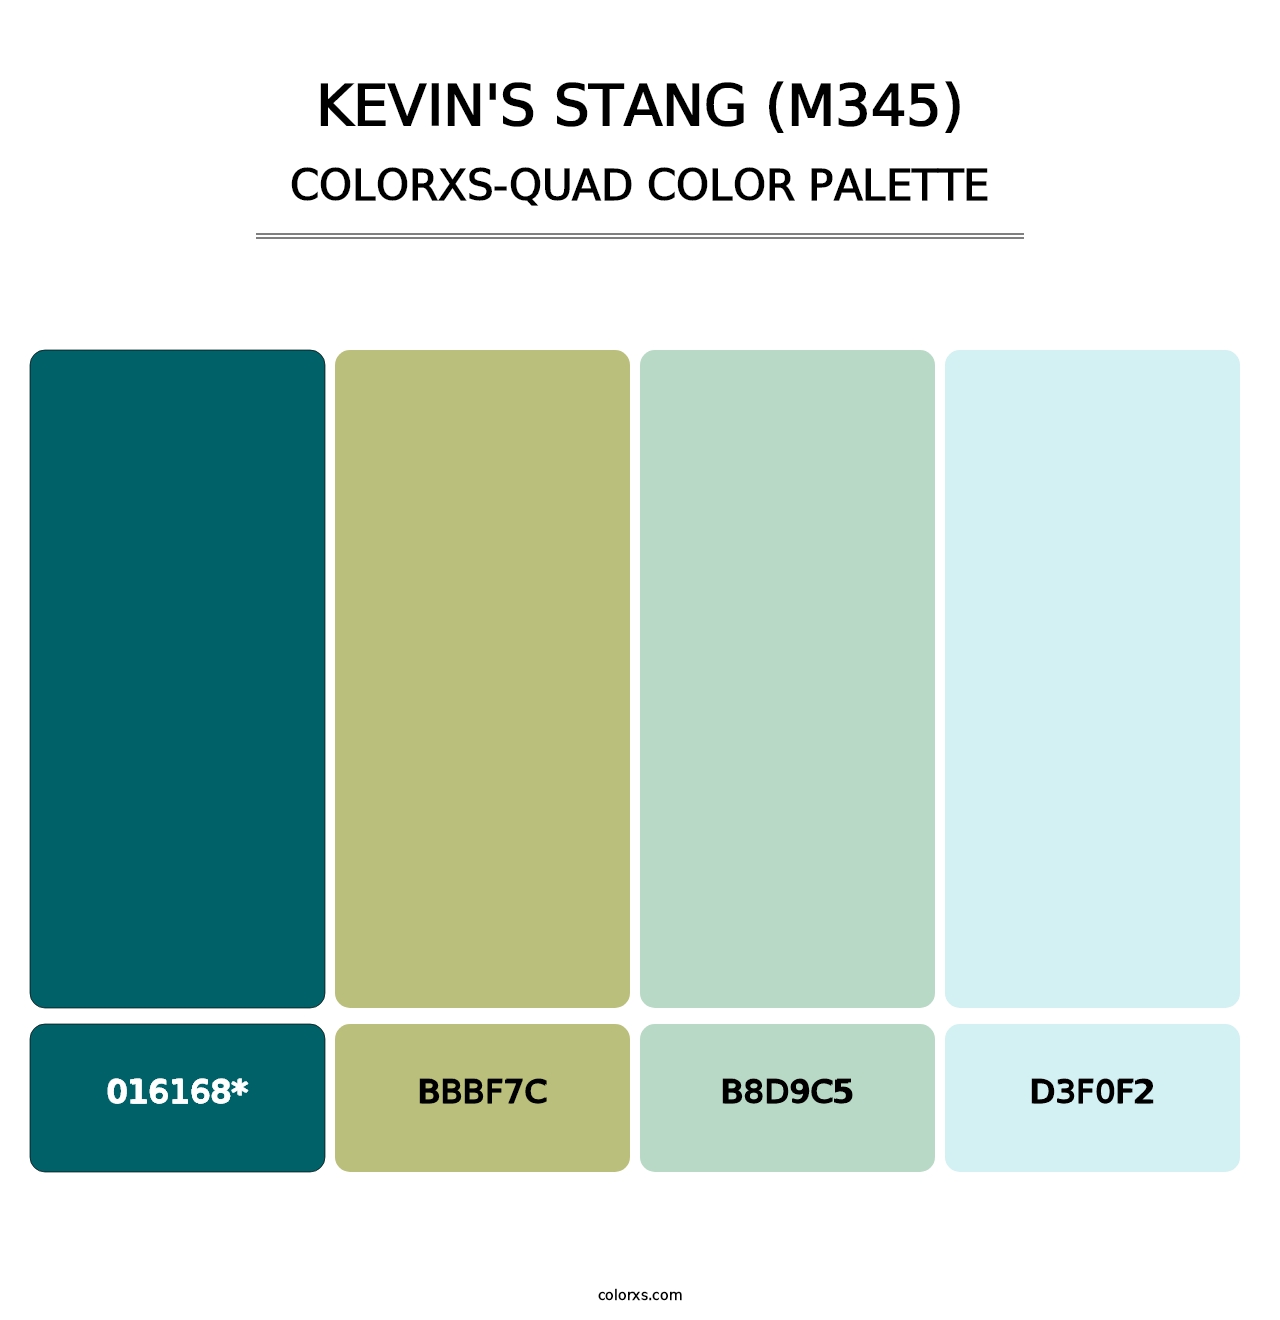 Kevin's Stang (M345) - Colorxs Quad Palette